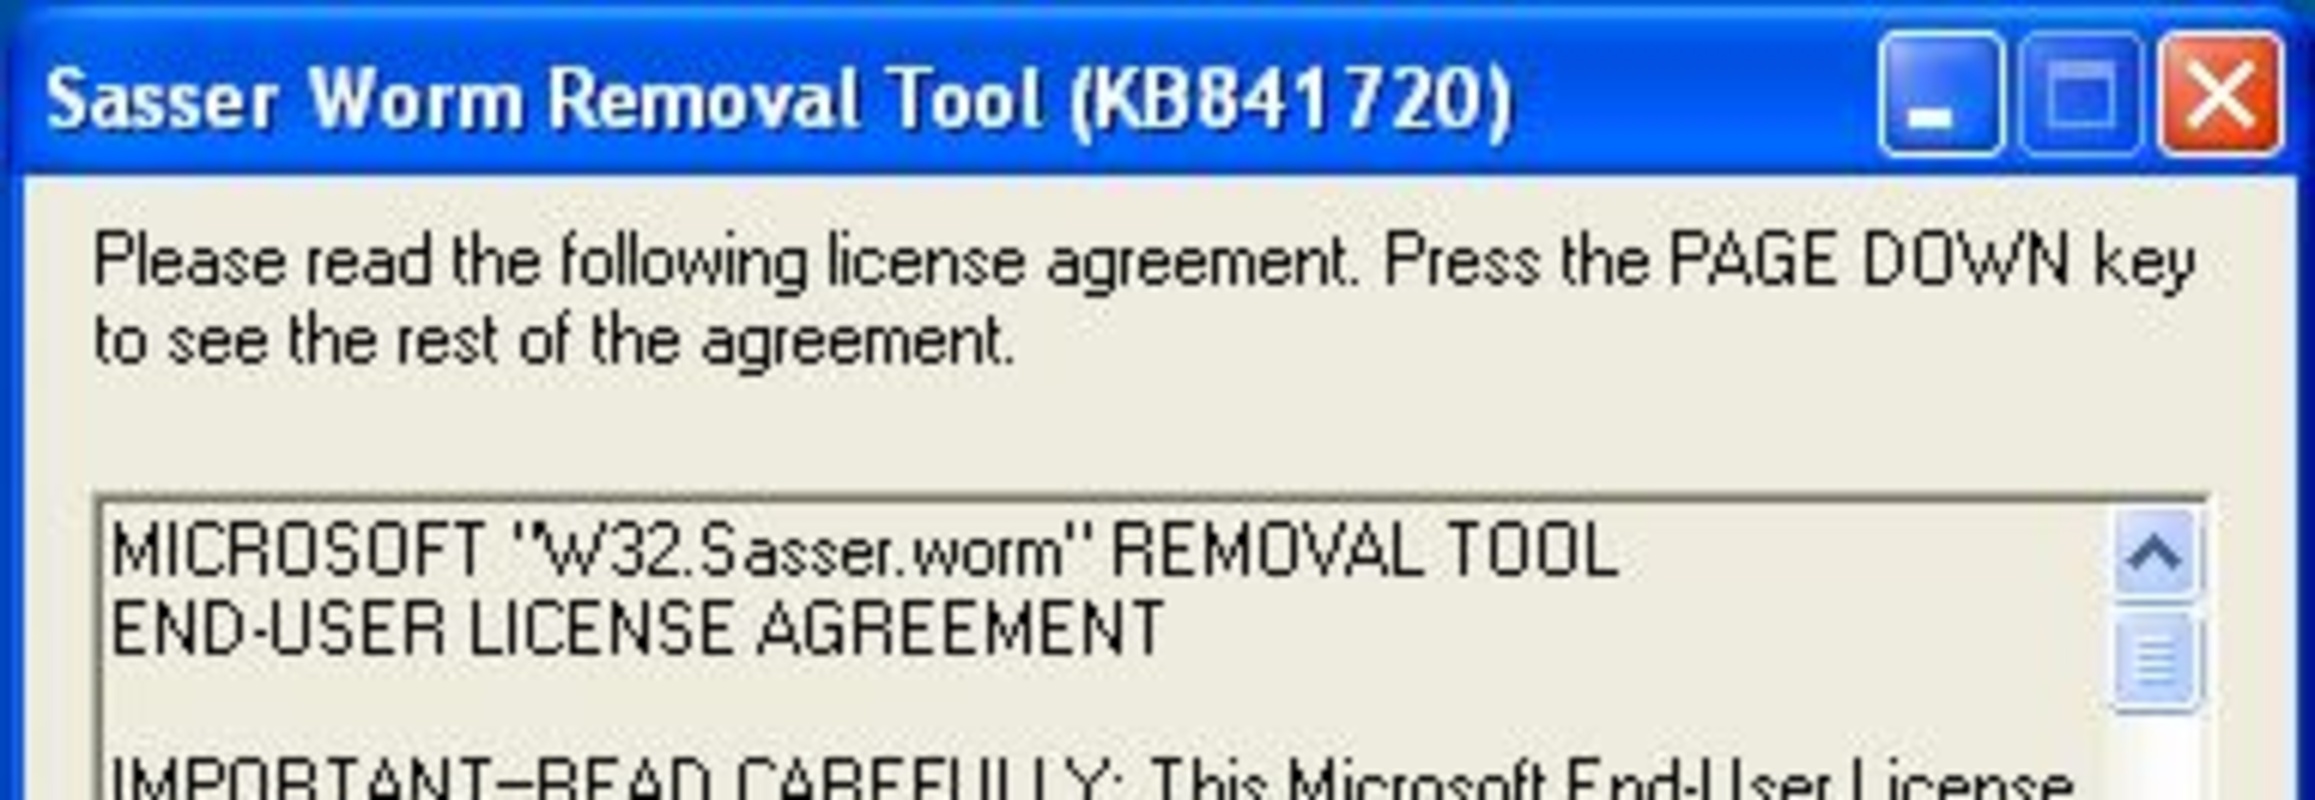 Microsoft Sasser Worm Removal 1.0.156.0 for Windows Screenshot 1